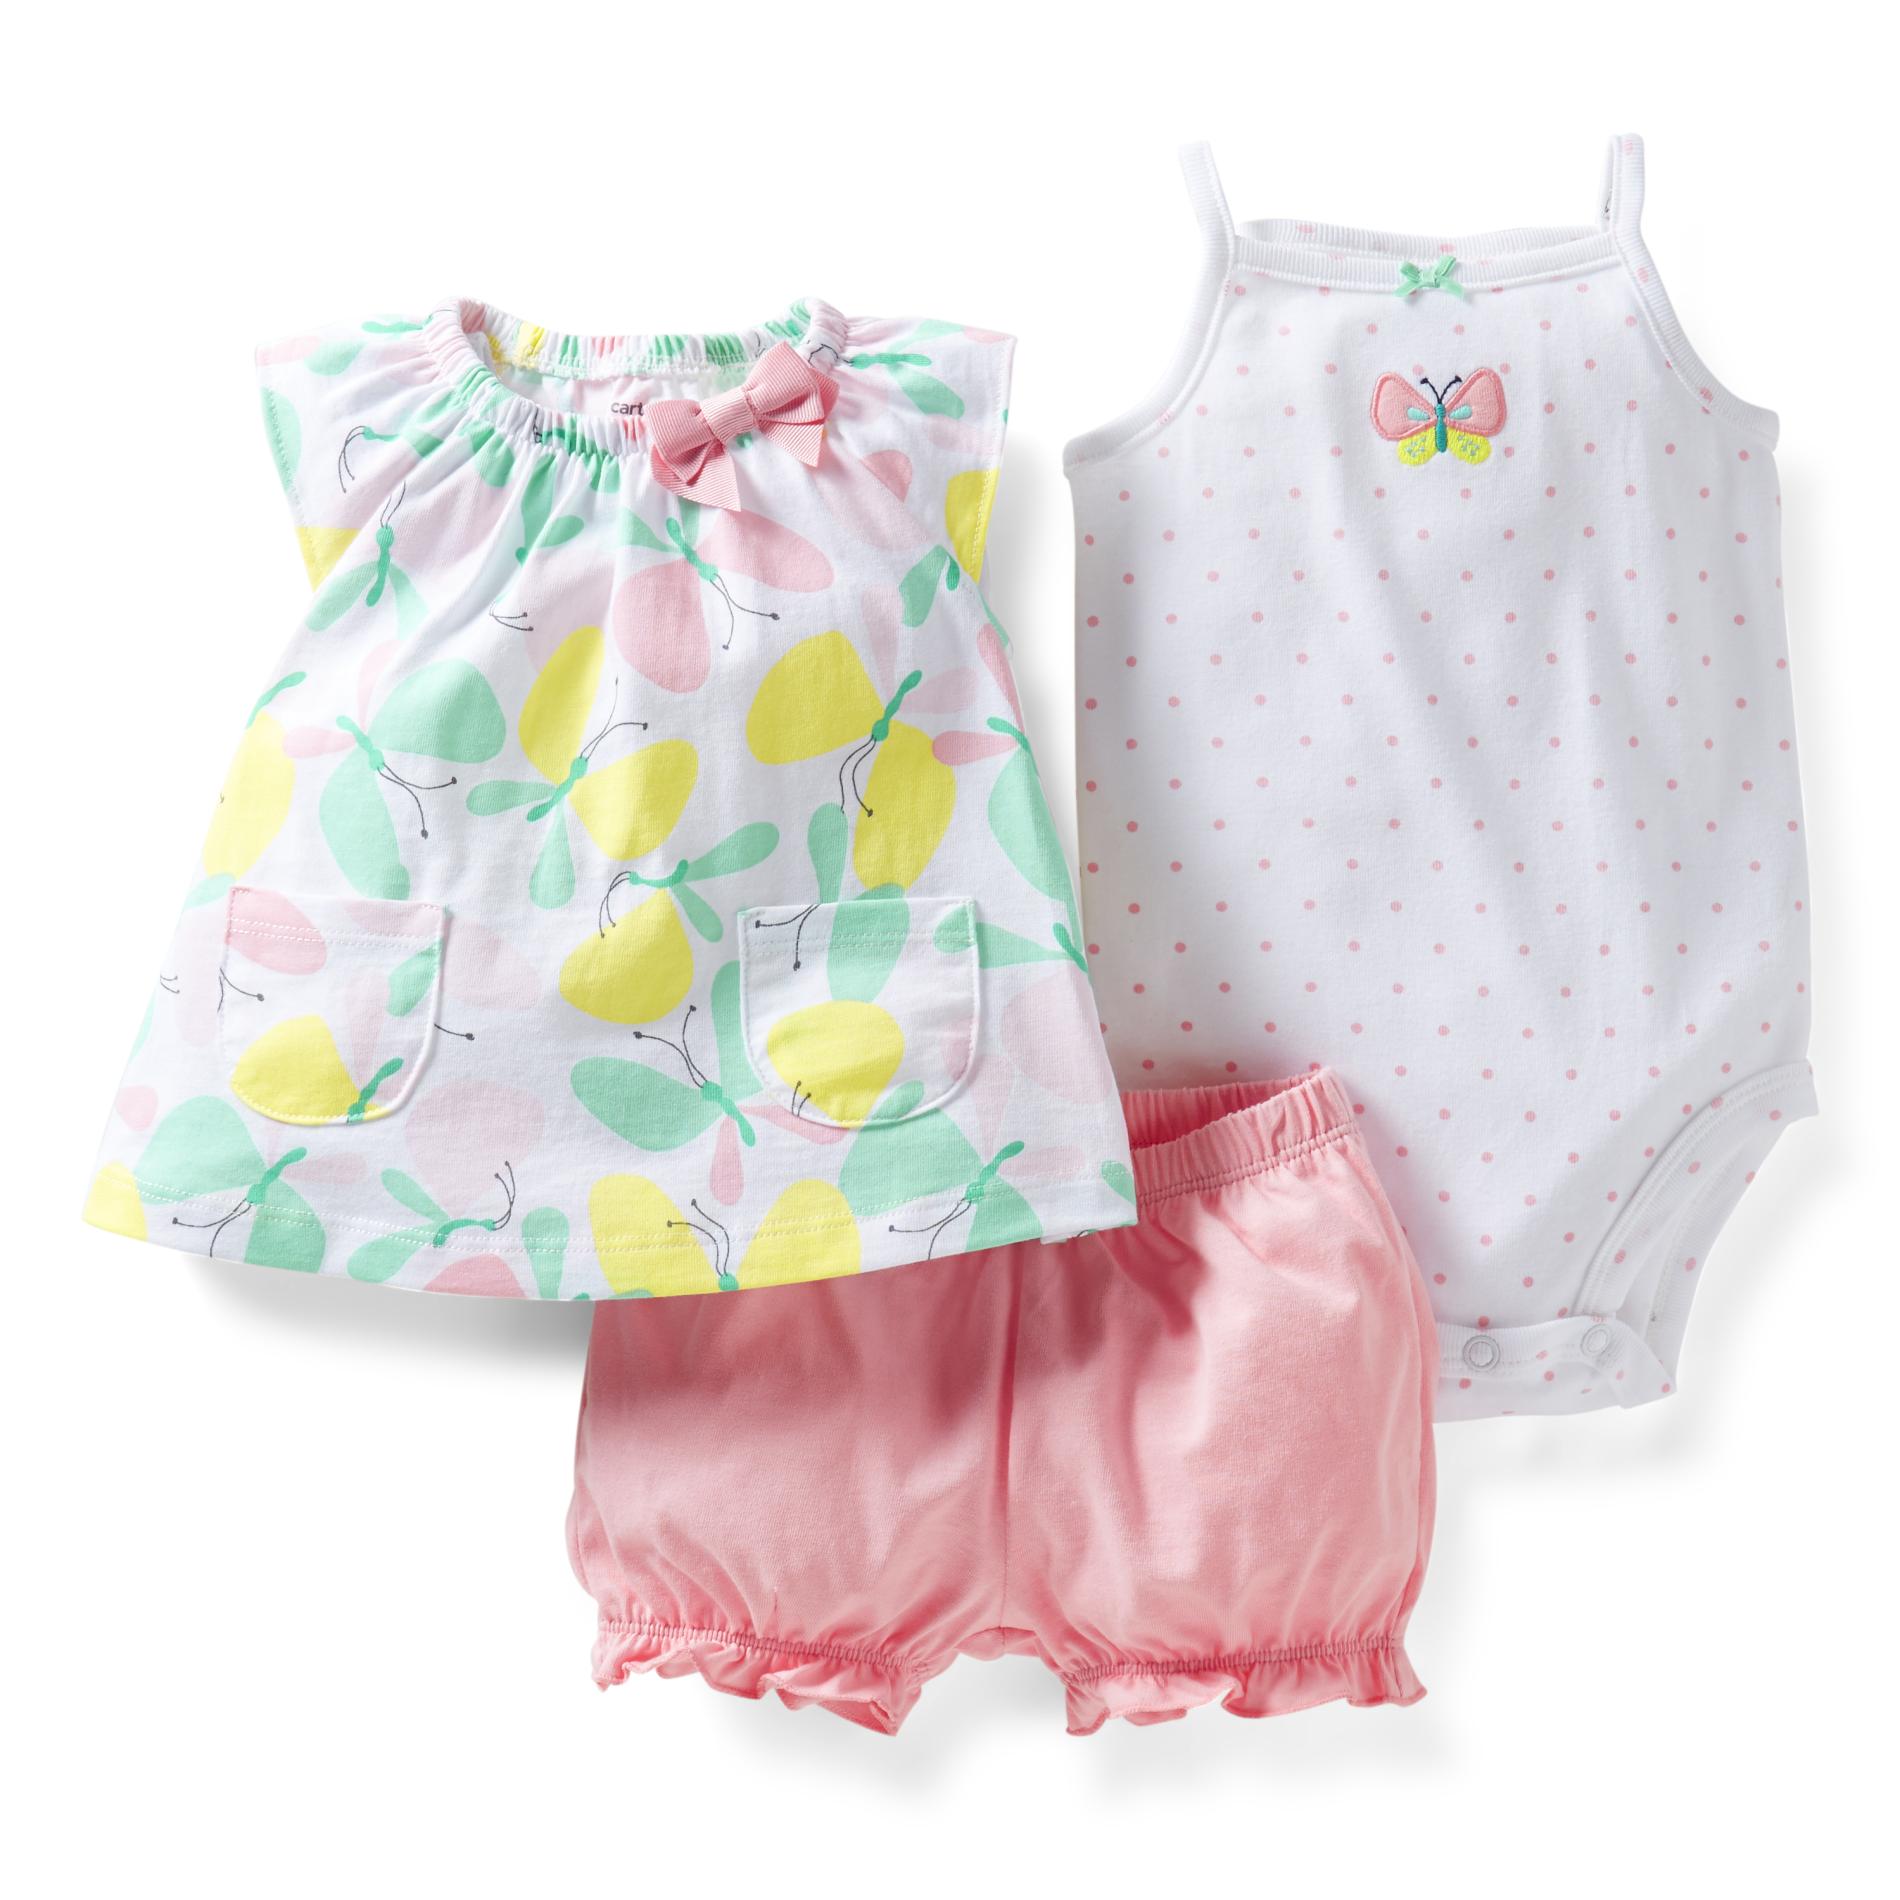 Carter's Newborn & Infant Girl's Bodysuit  Top & Diaper Cover - Butterflies